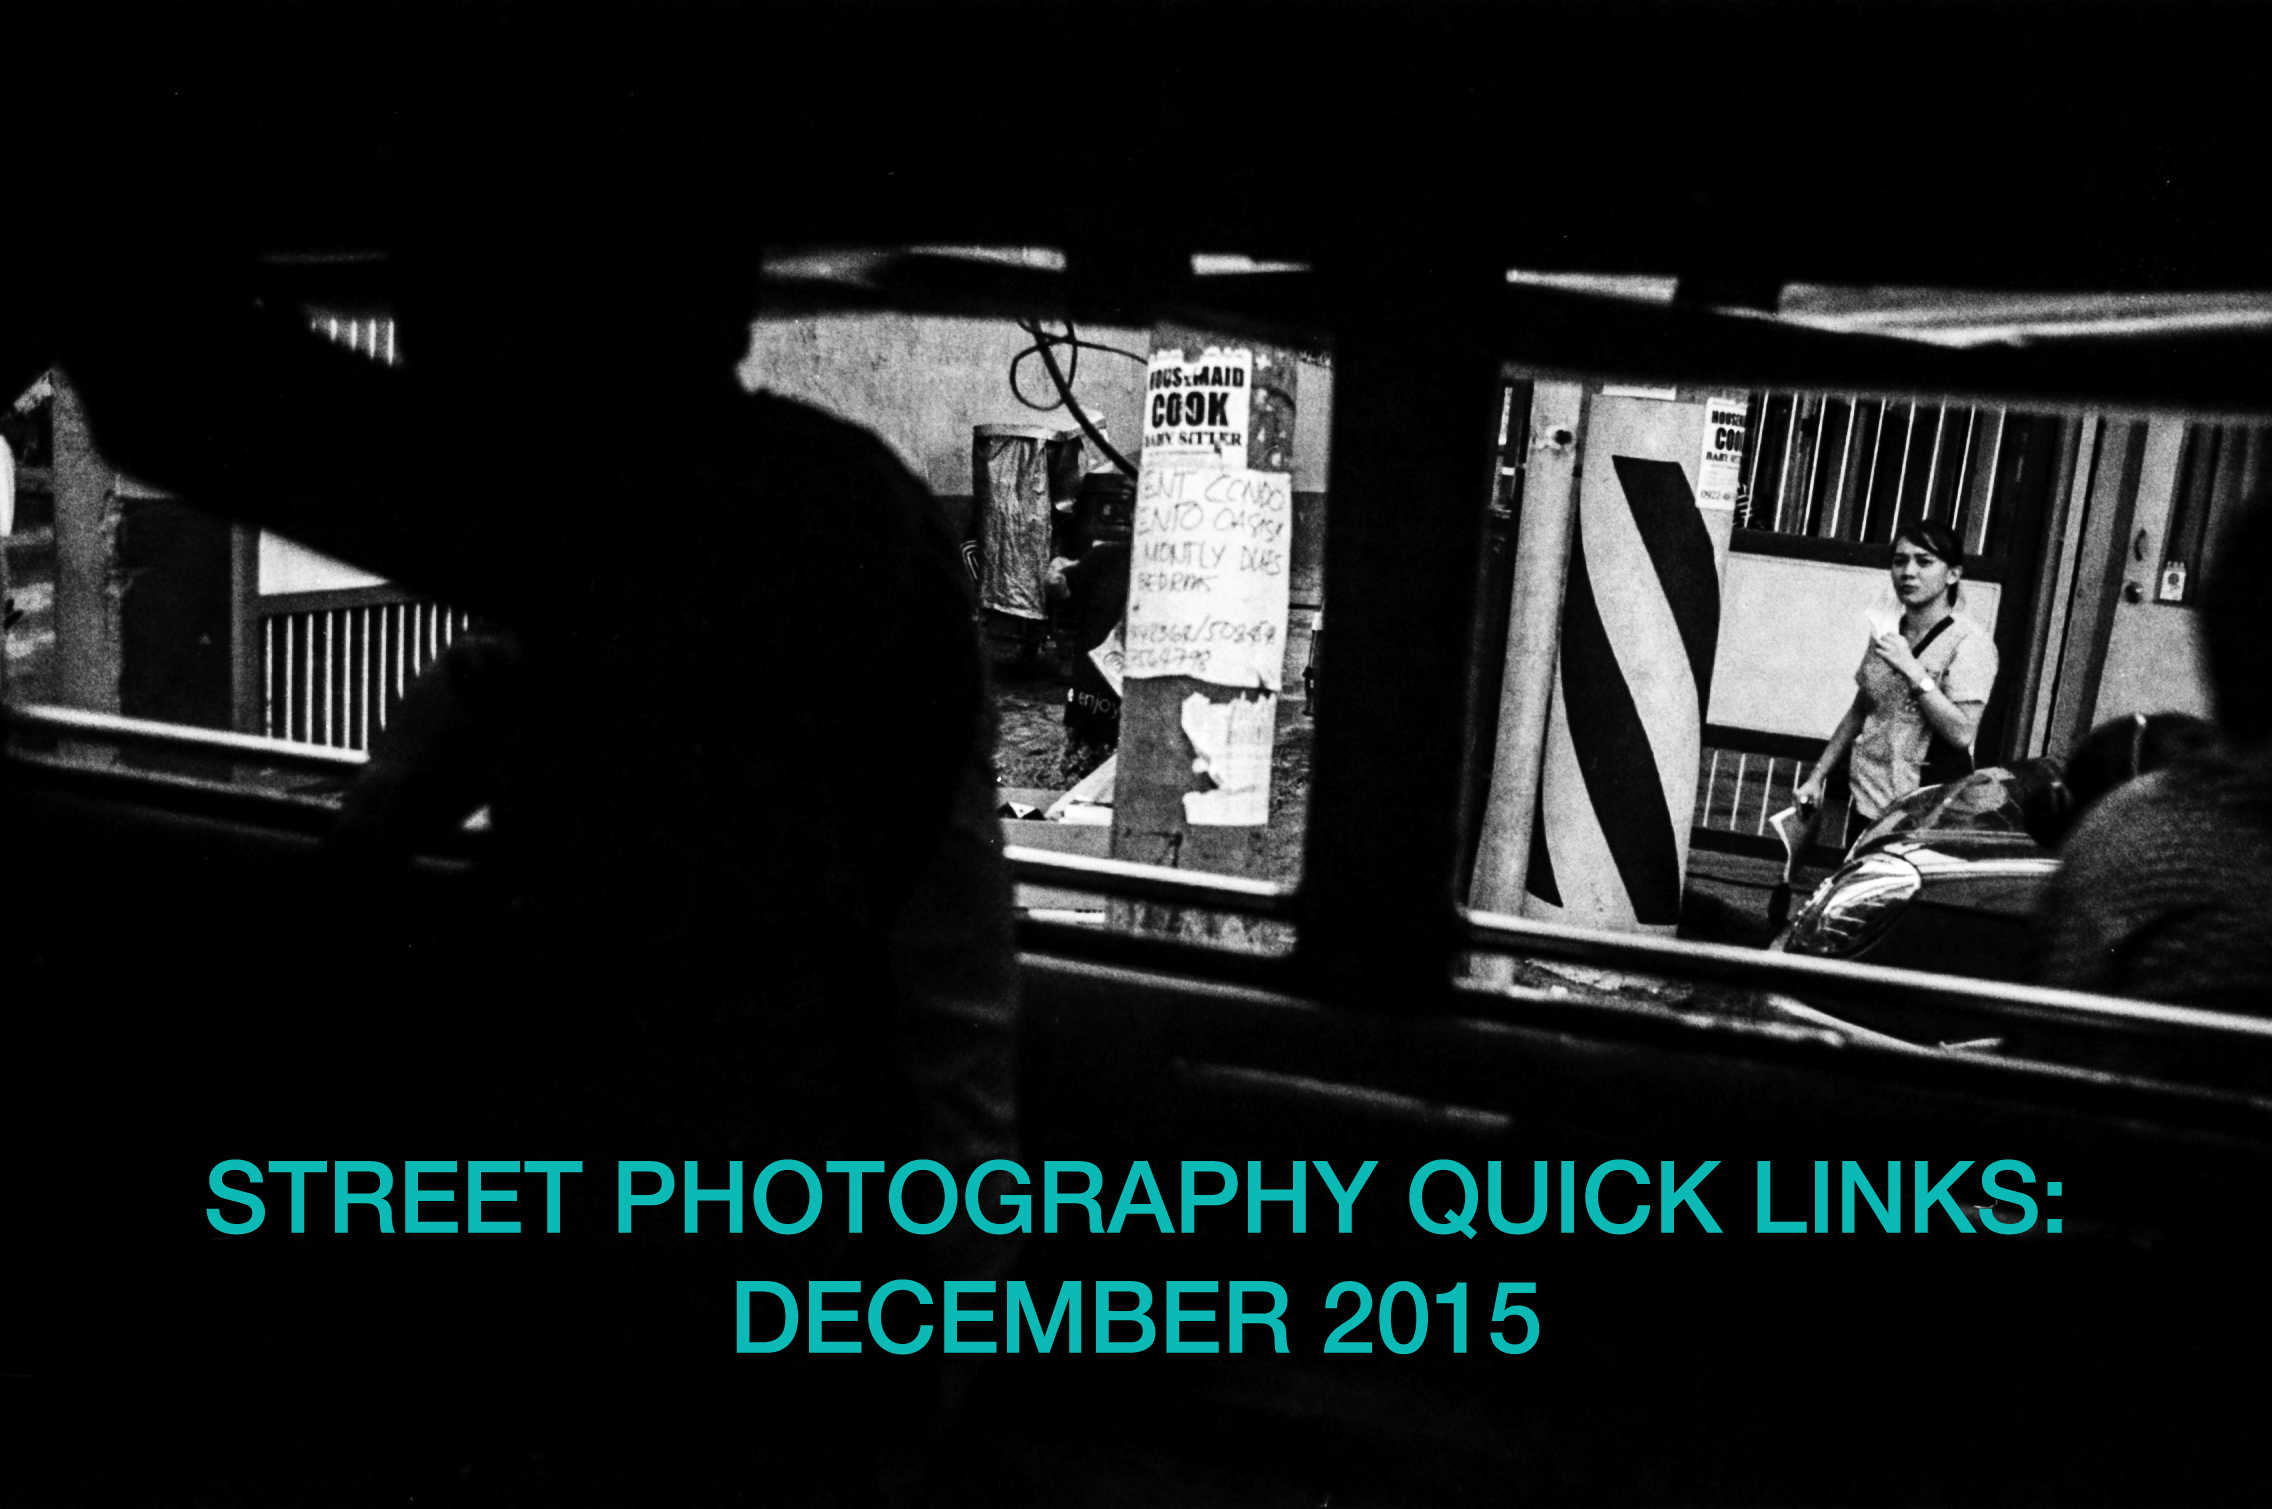 Street Photography Quick Links: December 2015